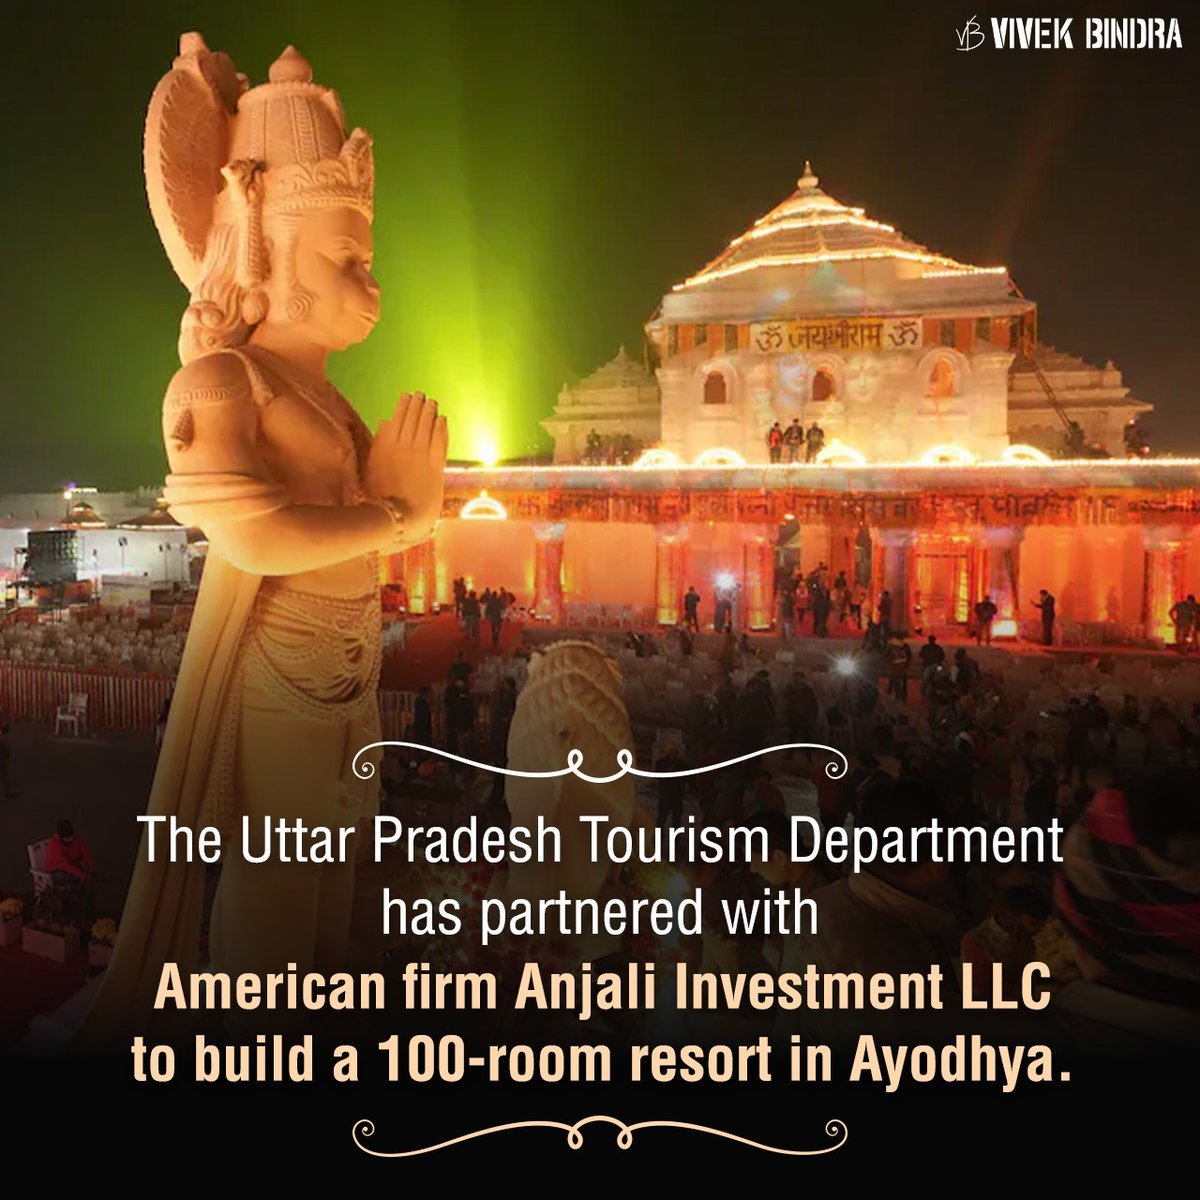 The Uttar Pradesh Tourism Department has signed an agreement with the American firm M/s Anjali Investment LLC for the construction of a 100-room resort in Ayodhya. bit short.

#BadaBusiness #DrVivekBindra #BusinessUpdate #RamMandir #AyodhyaRamMandir